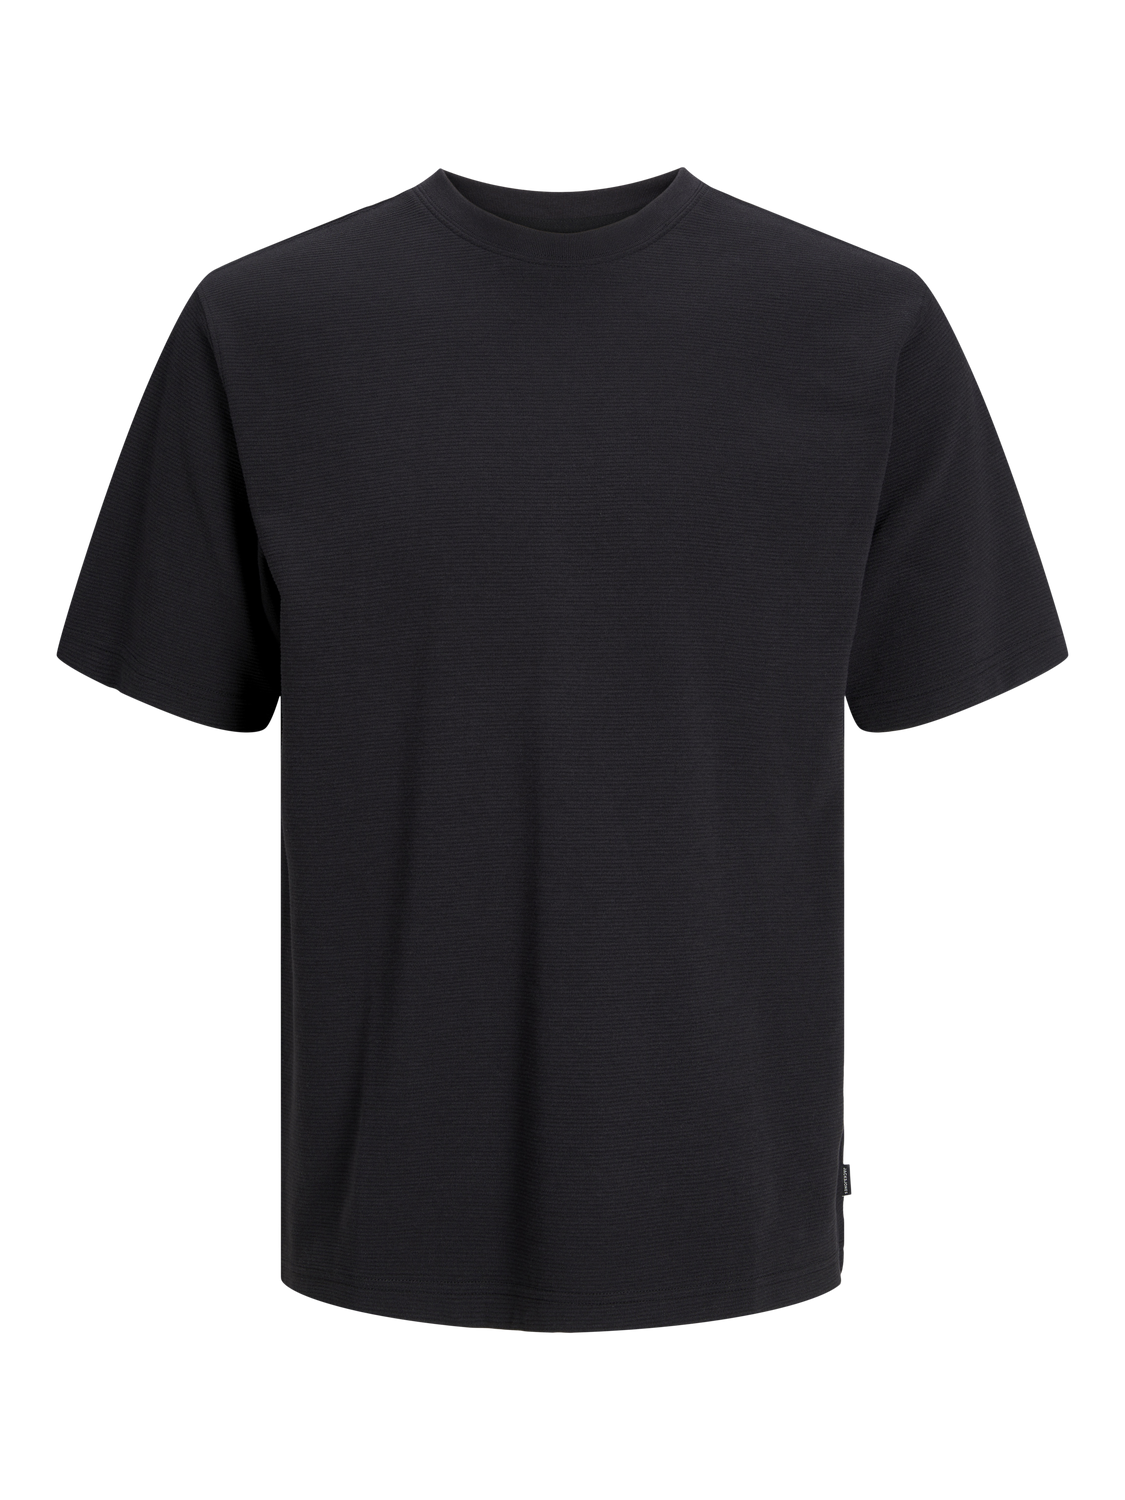 Jack & Jones American Fit Crew neck T-Shirt -Black Onyx - 12255539